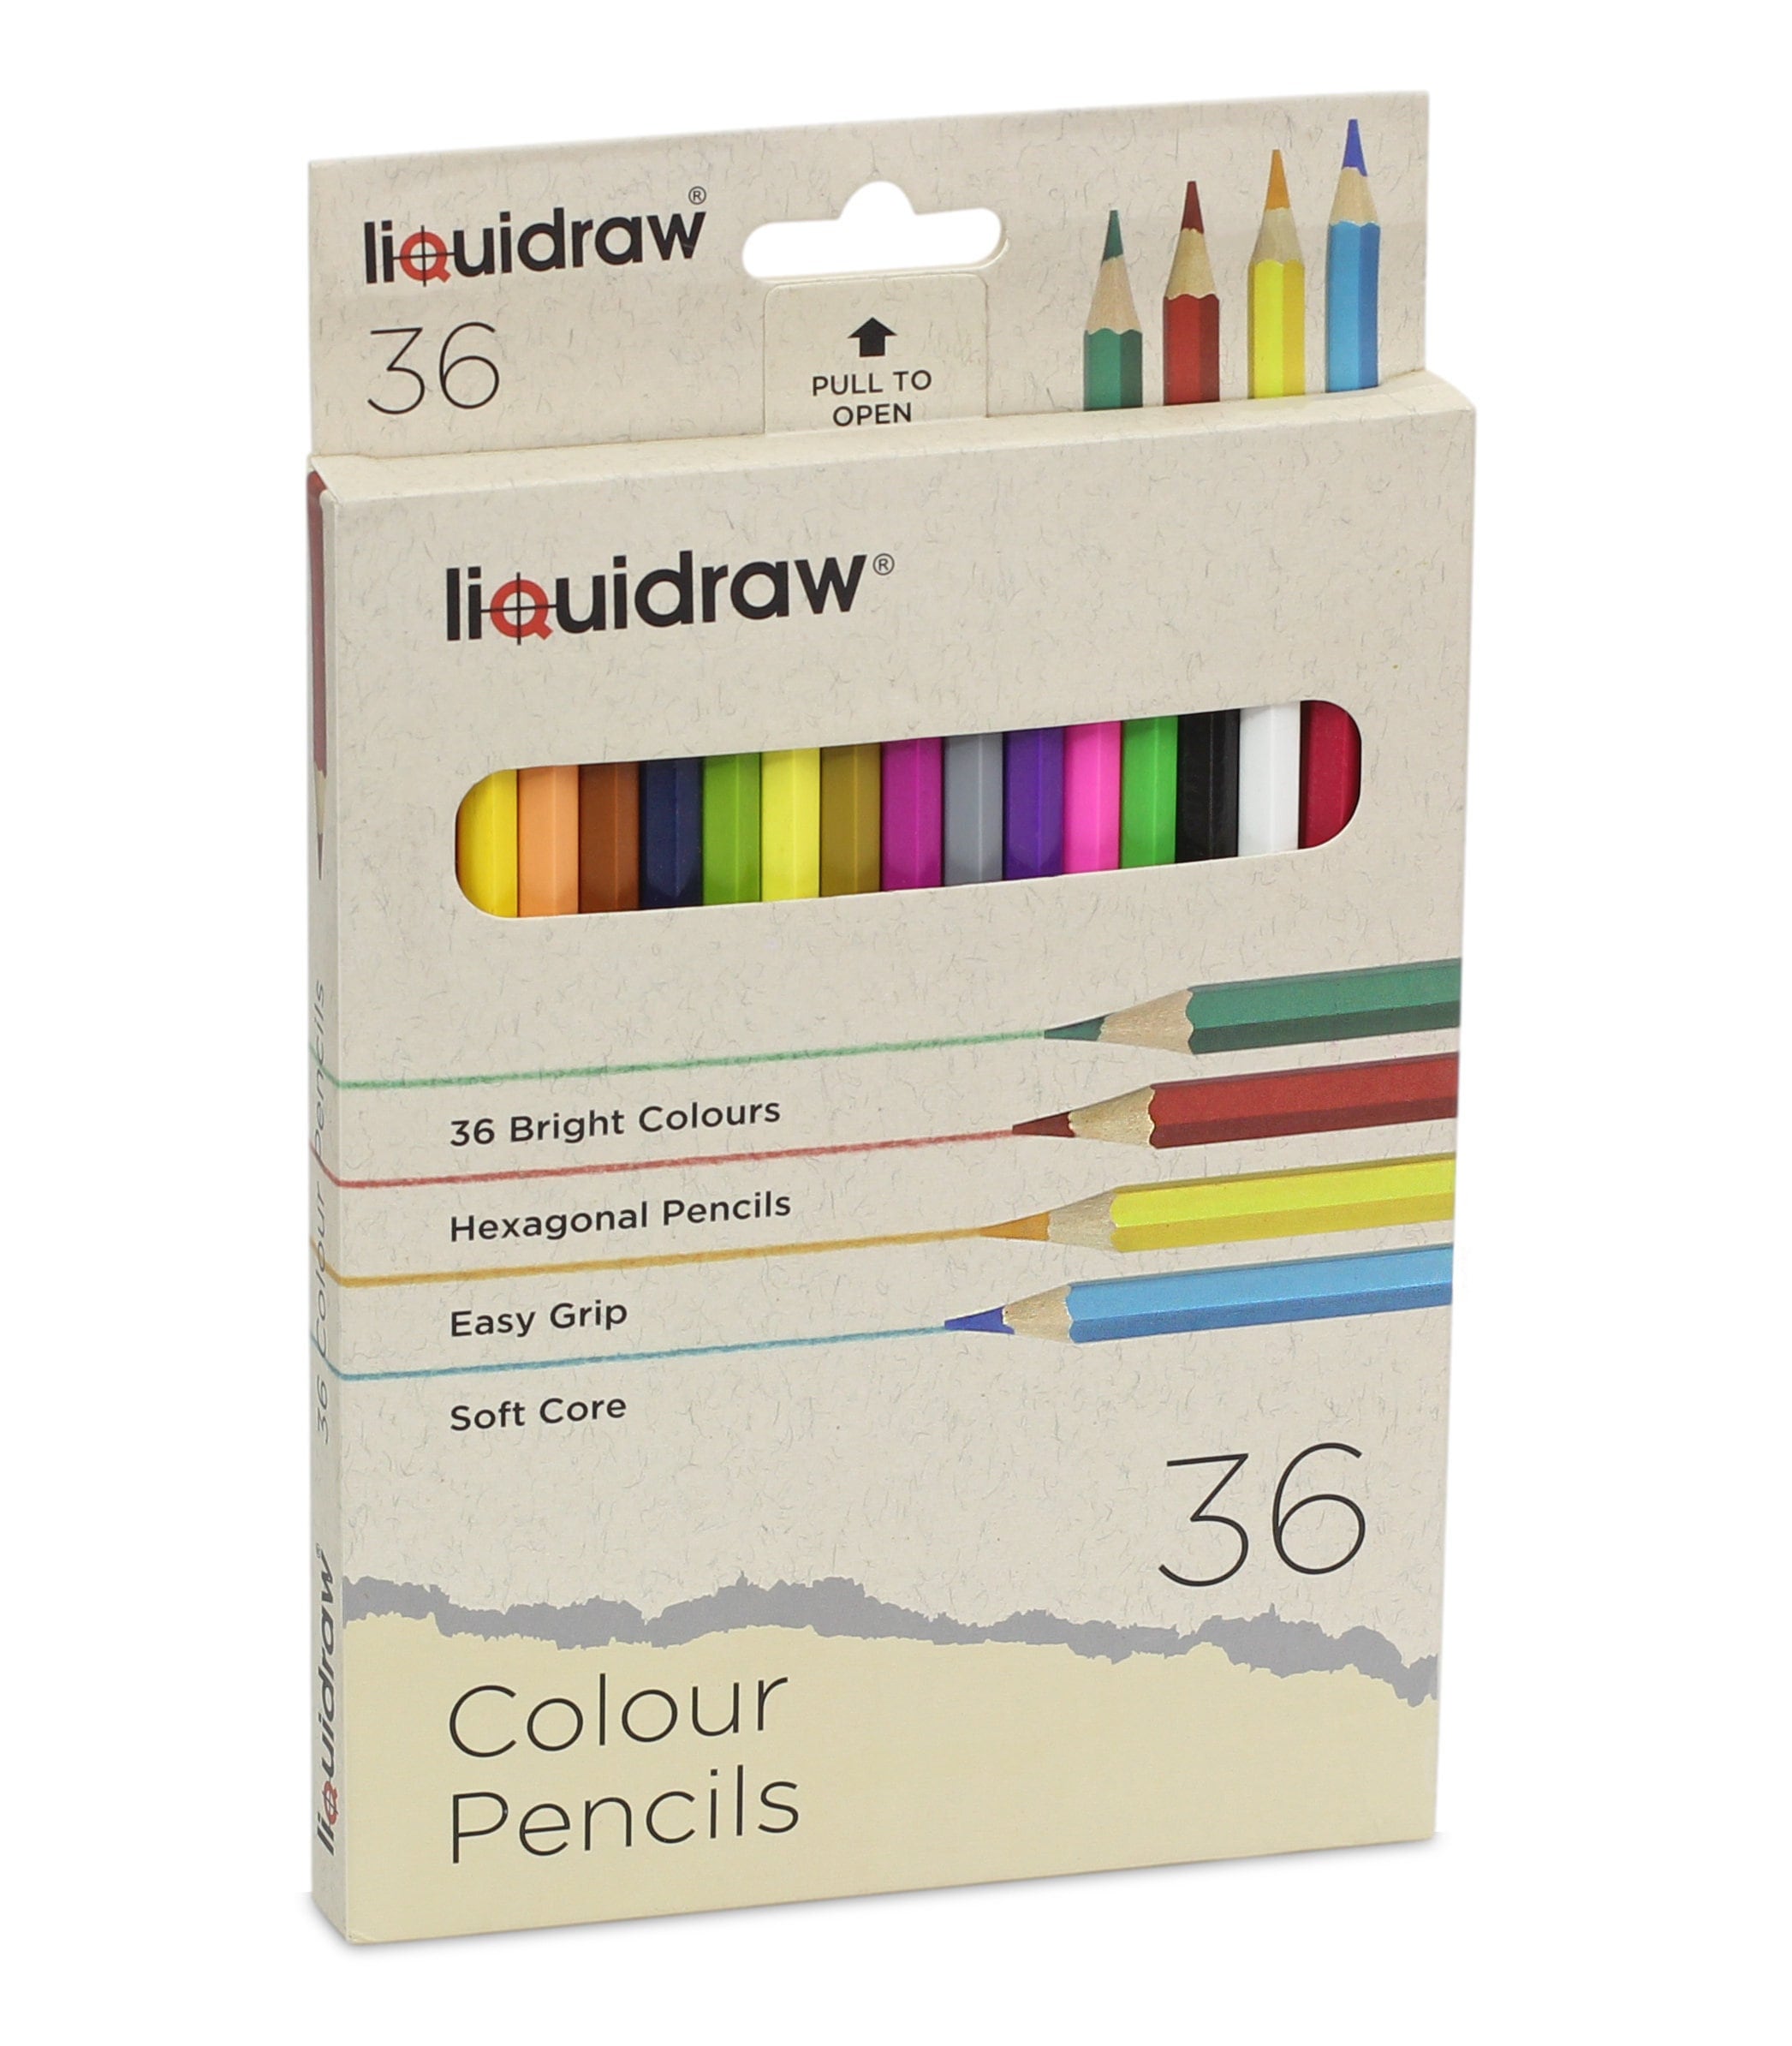 Linear Color Pens Set of 6, Patterned Roller Pens, Multicolor